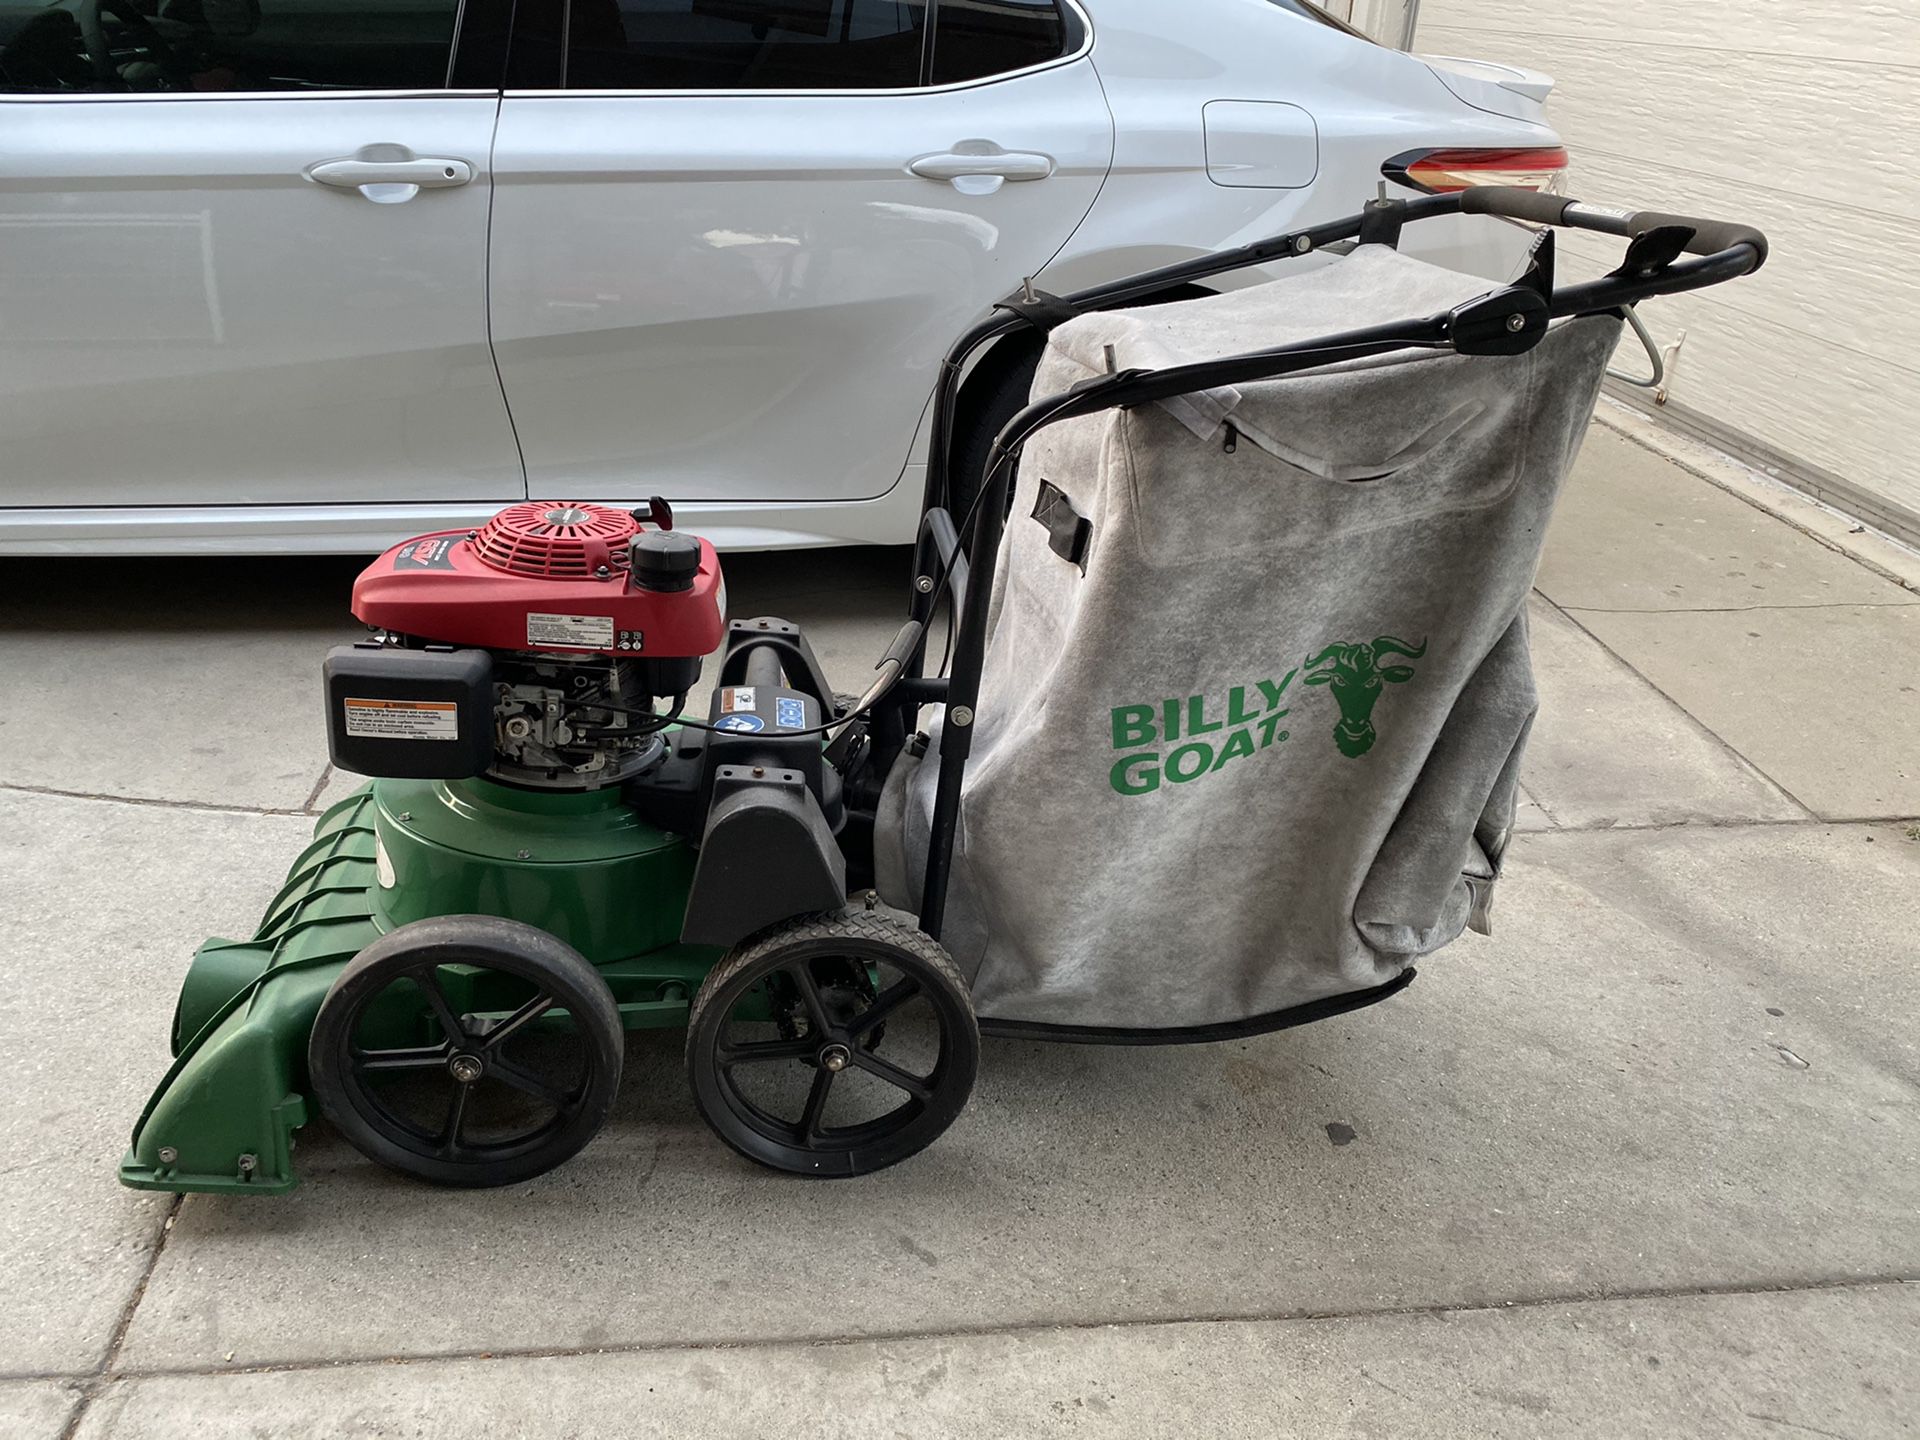 Billy Goat (27") 187cc Honda Self Propelled Lawn/Litter Vacuum w/ 2" Chippe